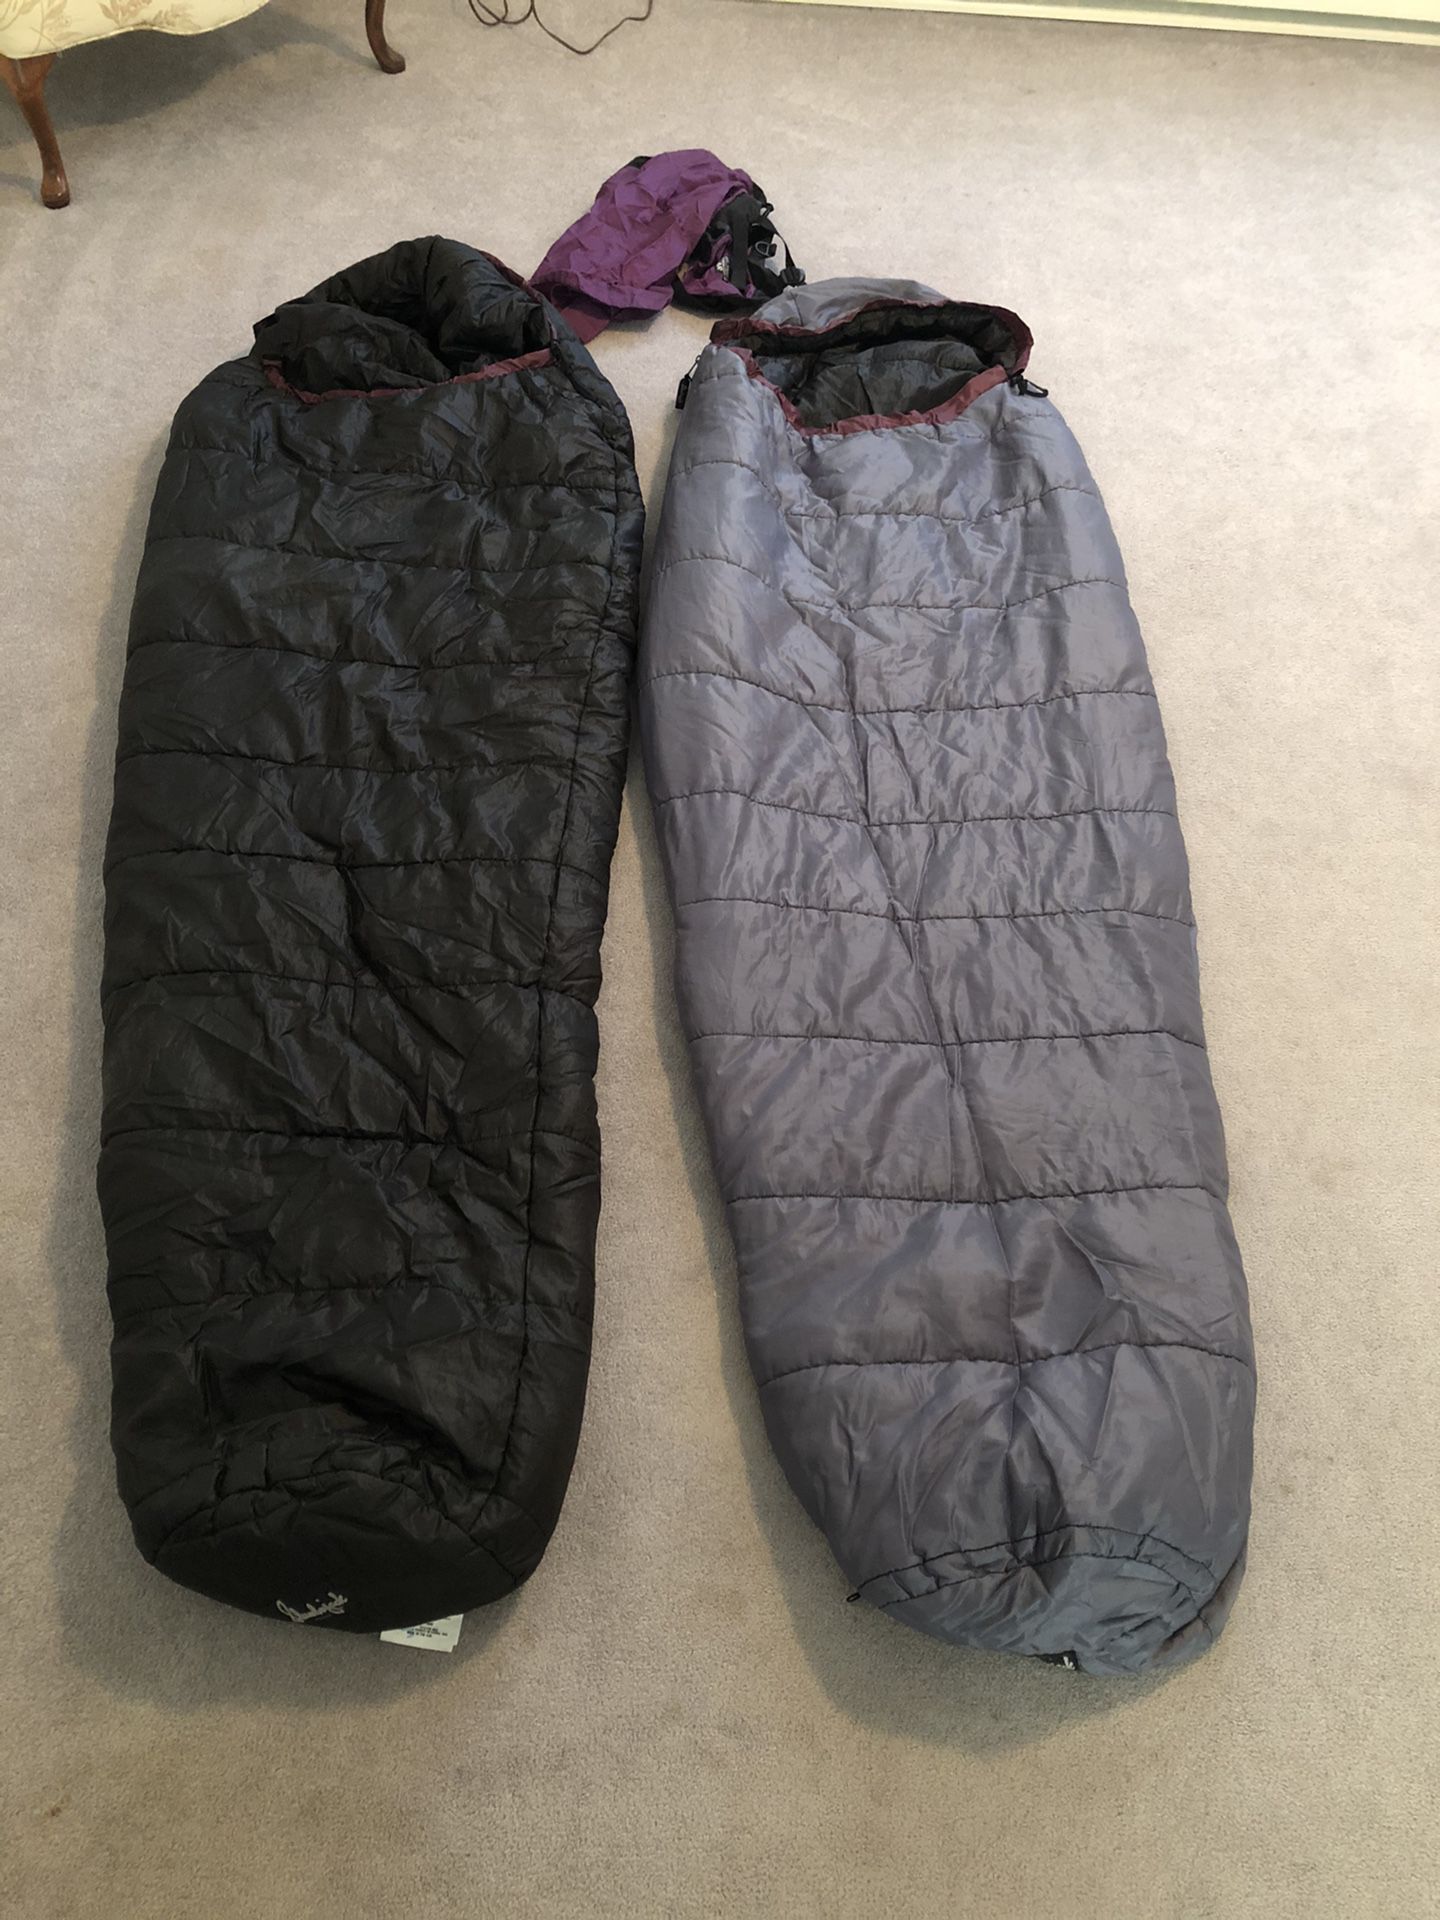 Slumberjack 4 Season Sleeping Bag System With 5 Degree Outer Bag And 40 Degree Inner Bag.